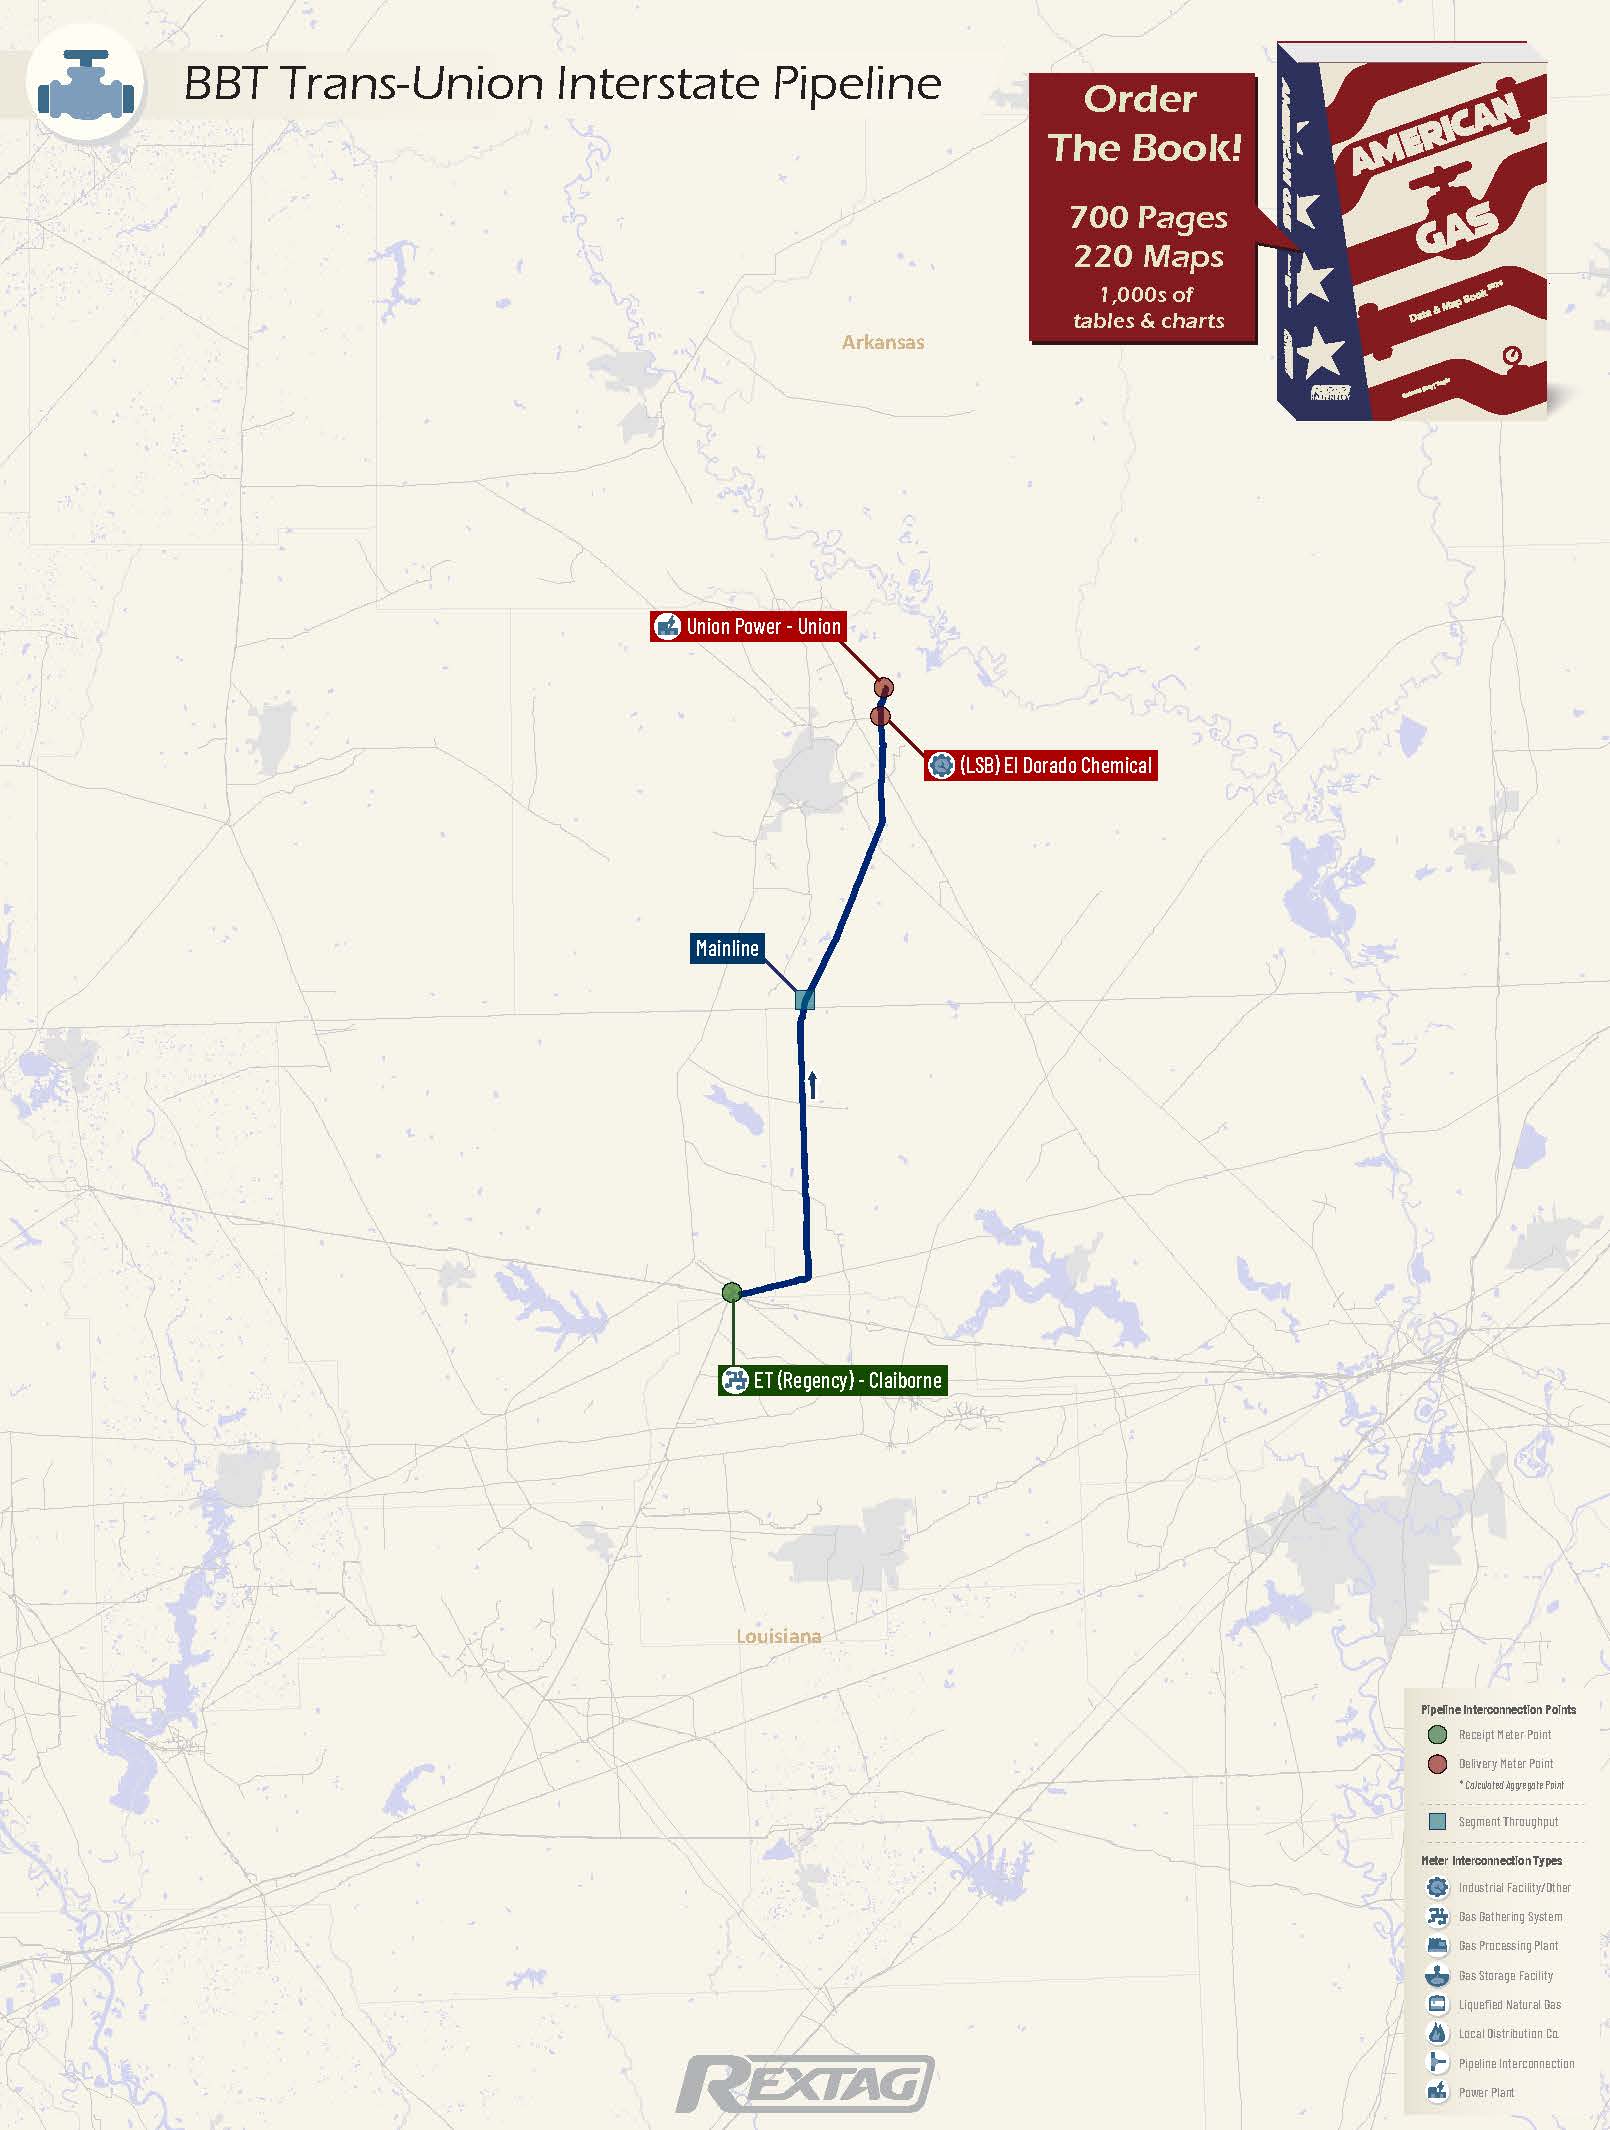 BBT Trans-Union Interstate Pipeline